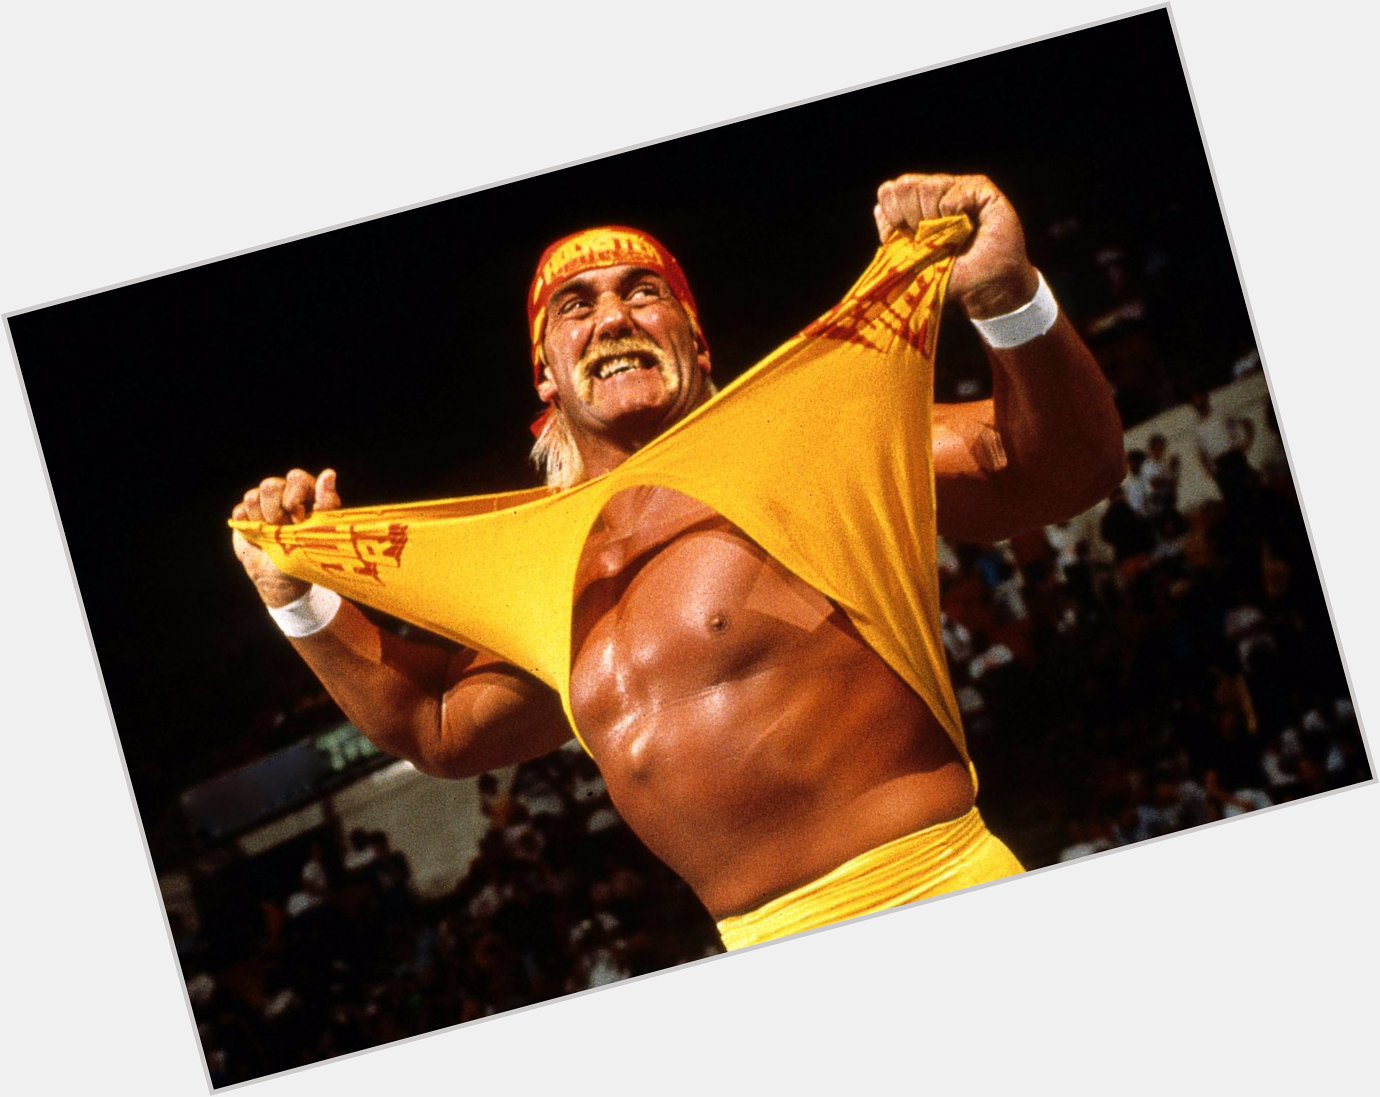  Happy Birthday to the ICON known as Hulk Hogan! 